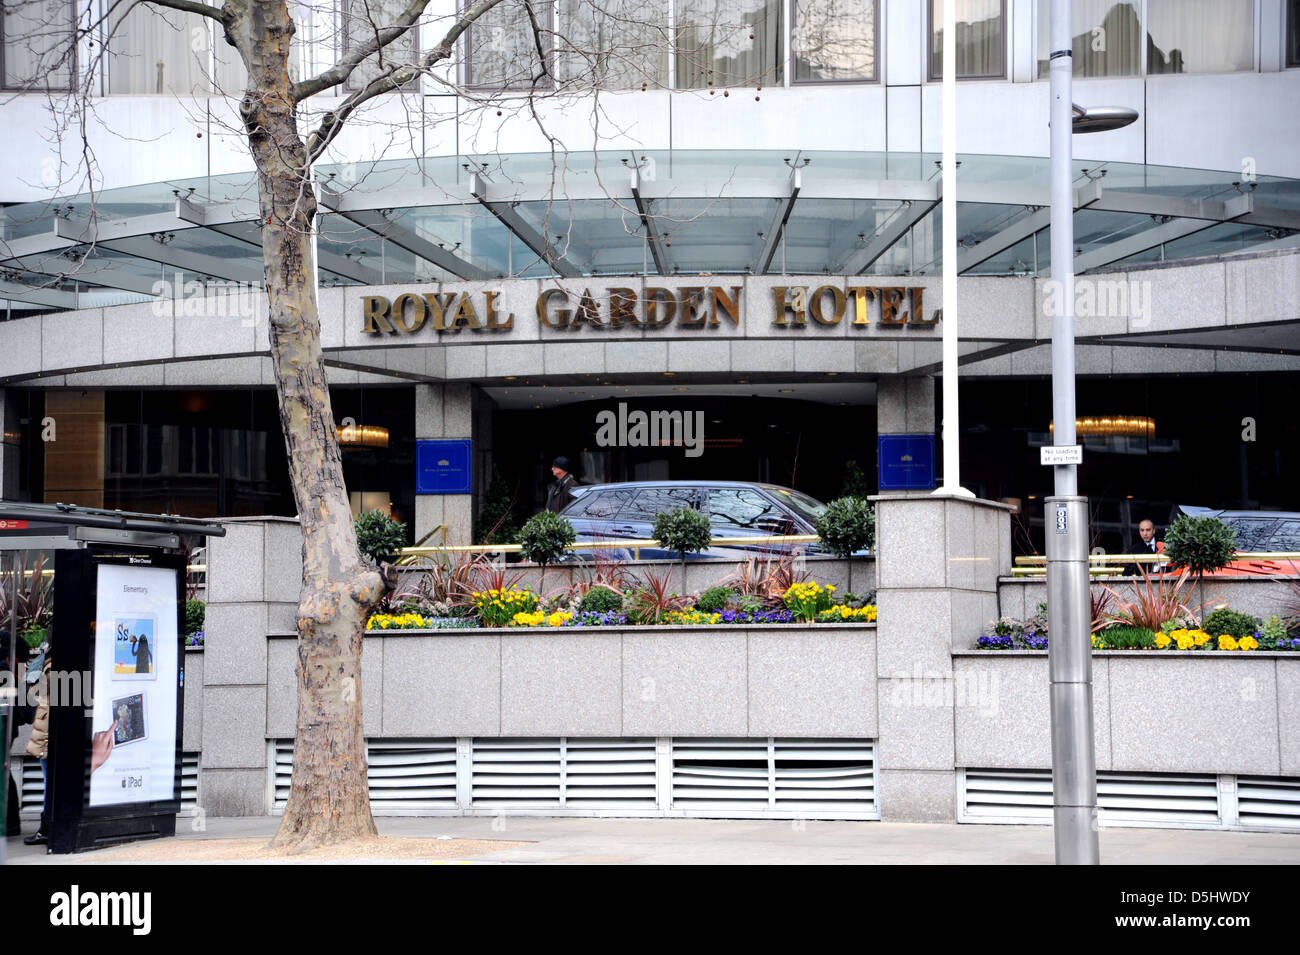 Royal Garden Hotel at the end of Kensington High Street London UK Stock Photo